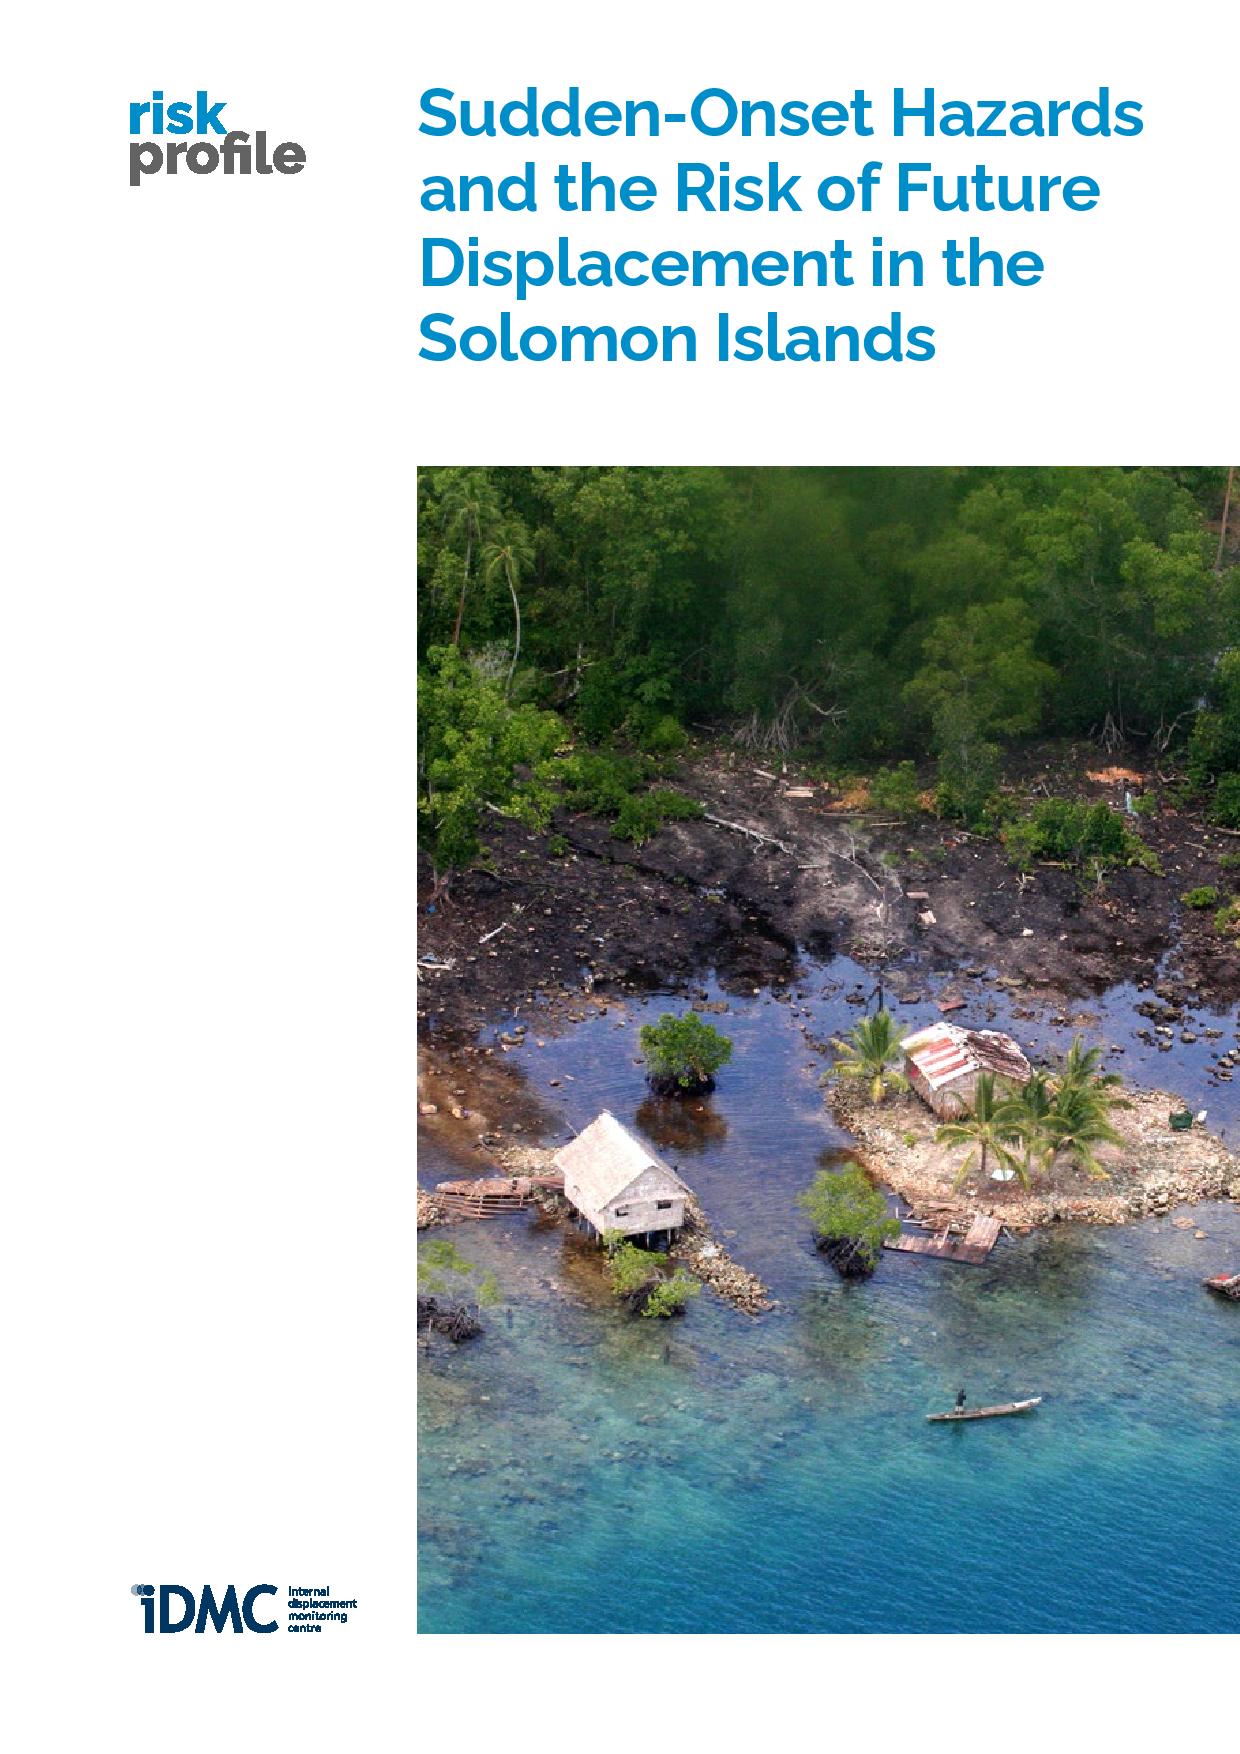 Solomon Islands: Disaster Displacement Risk Profile